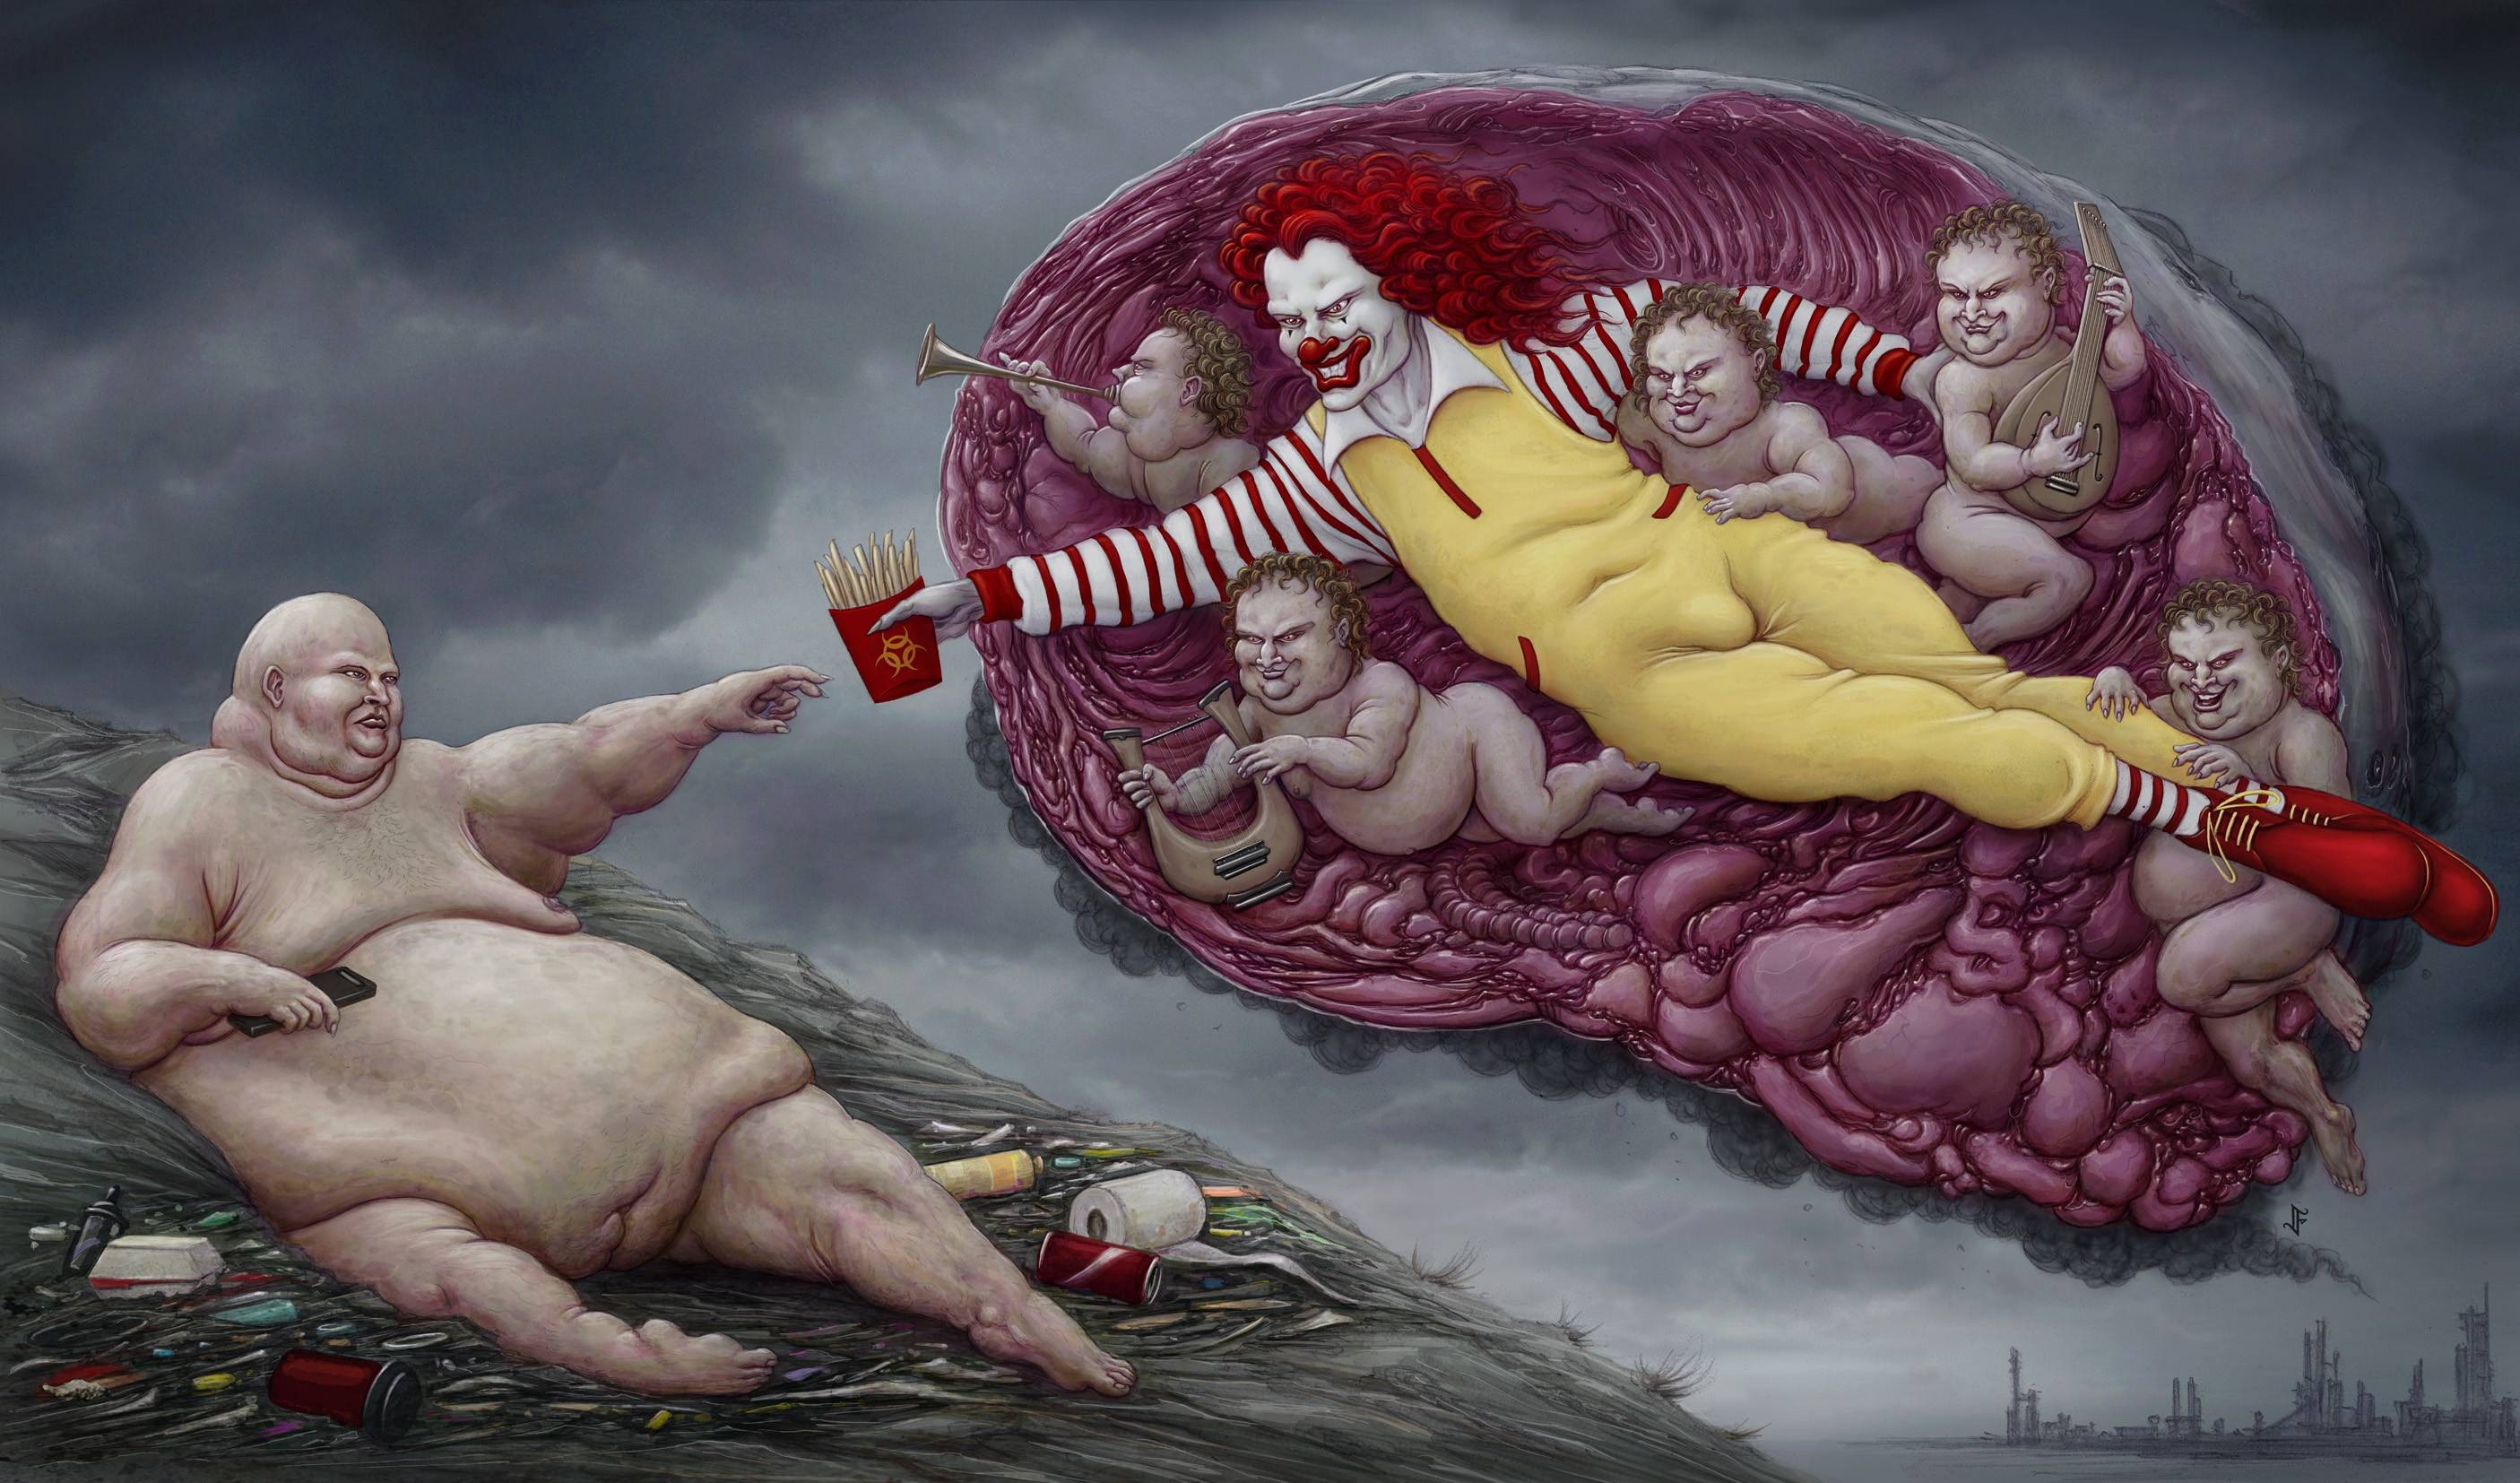 General 2811x1654 The Creation of Adam McDonald's dark humor Ronald McDonald digital art obese fast food clown